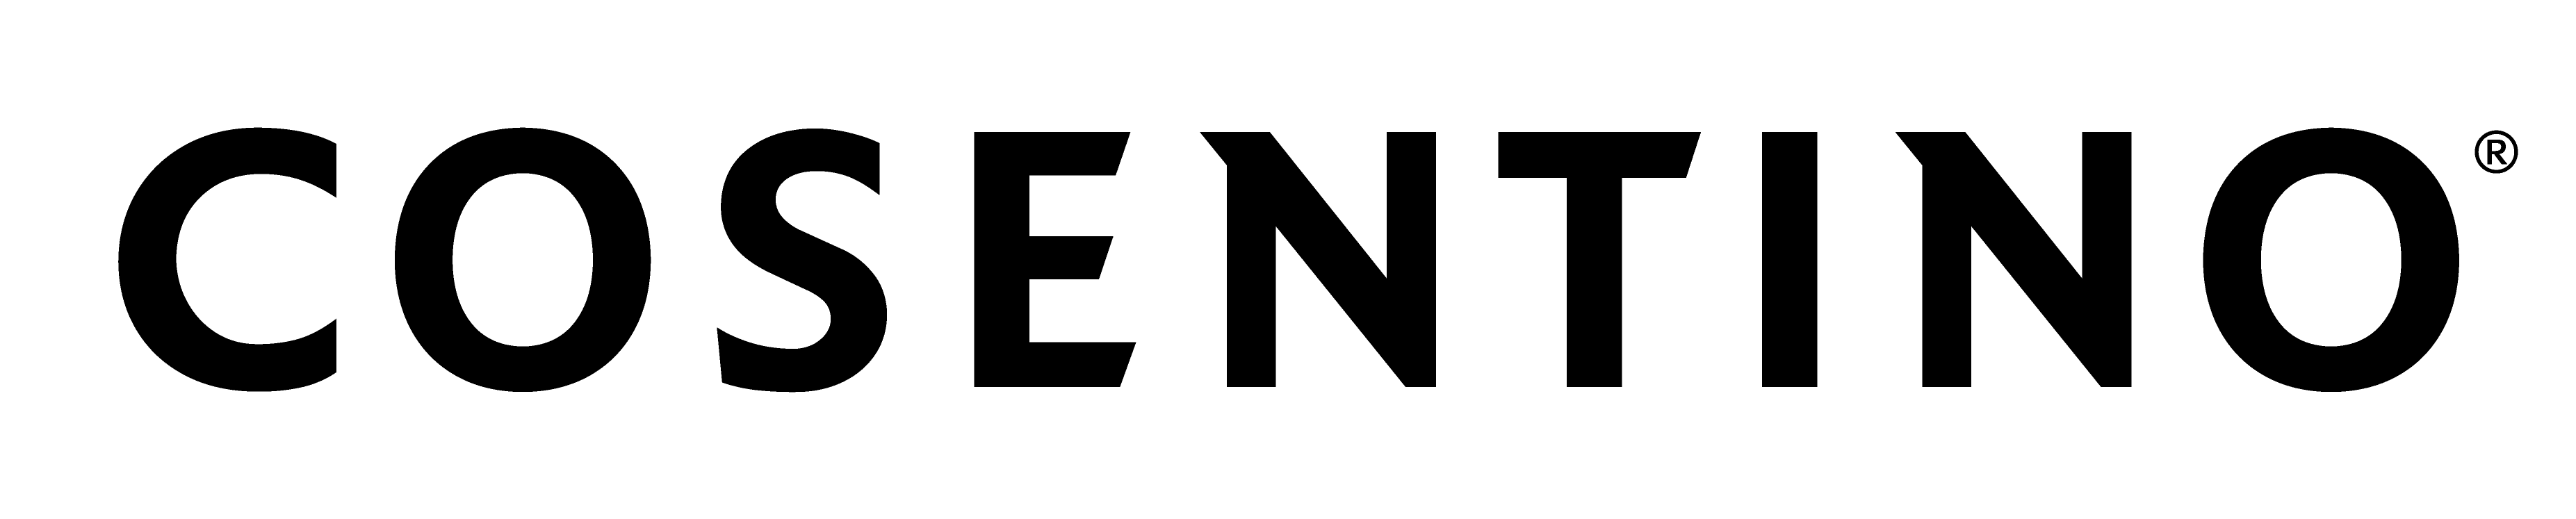 Logo de Cosentino